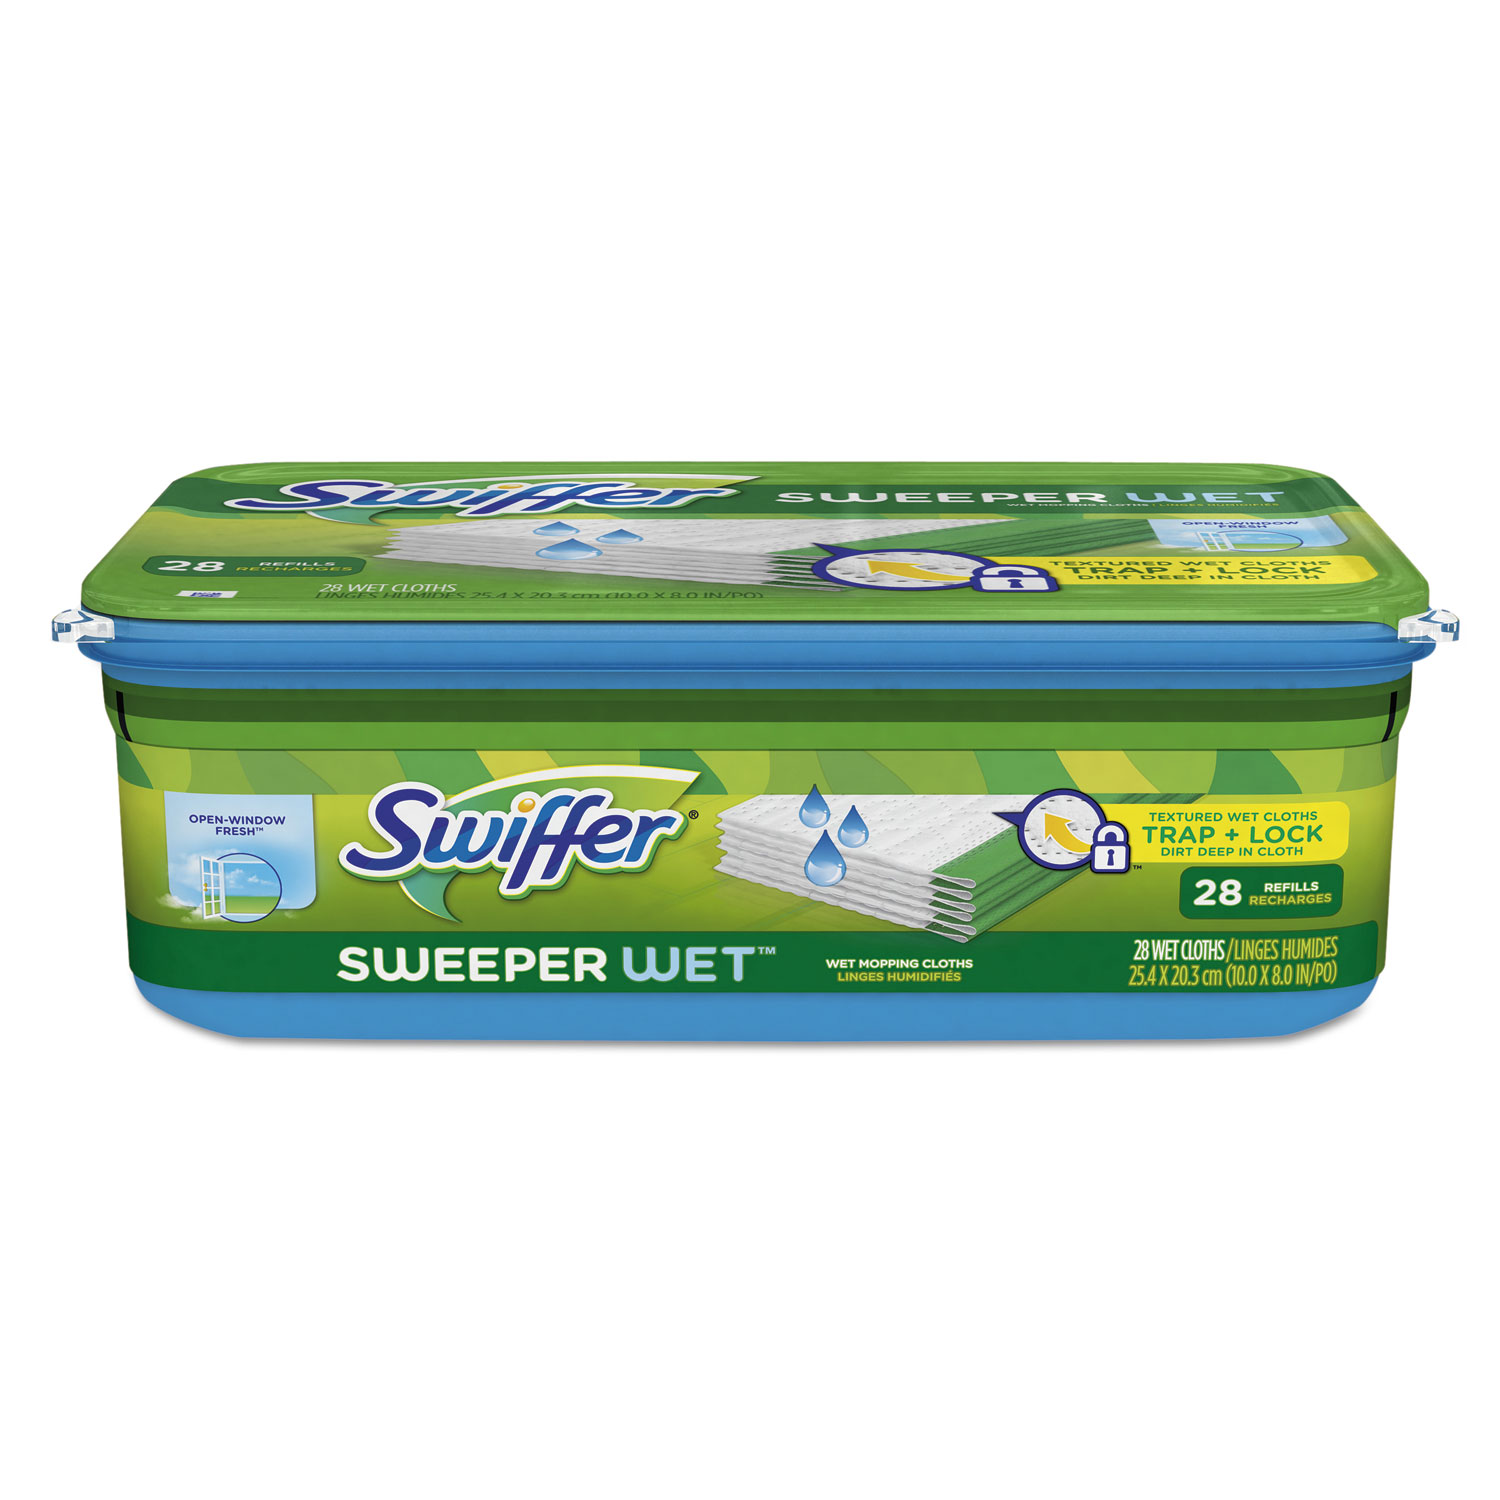  Swiffer 82856 Wet Refill Cloths, Open Window Fresh, Cloth, White, 10 x 8, 28/Box, 6 Boxes/CT (PGC82856) 